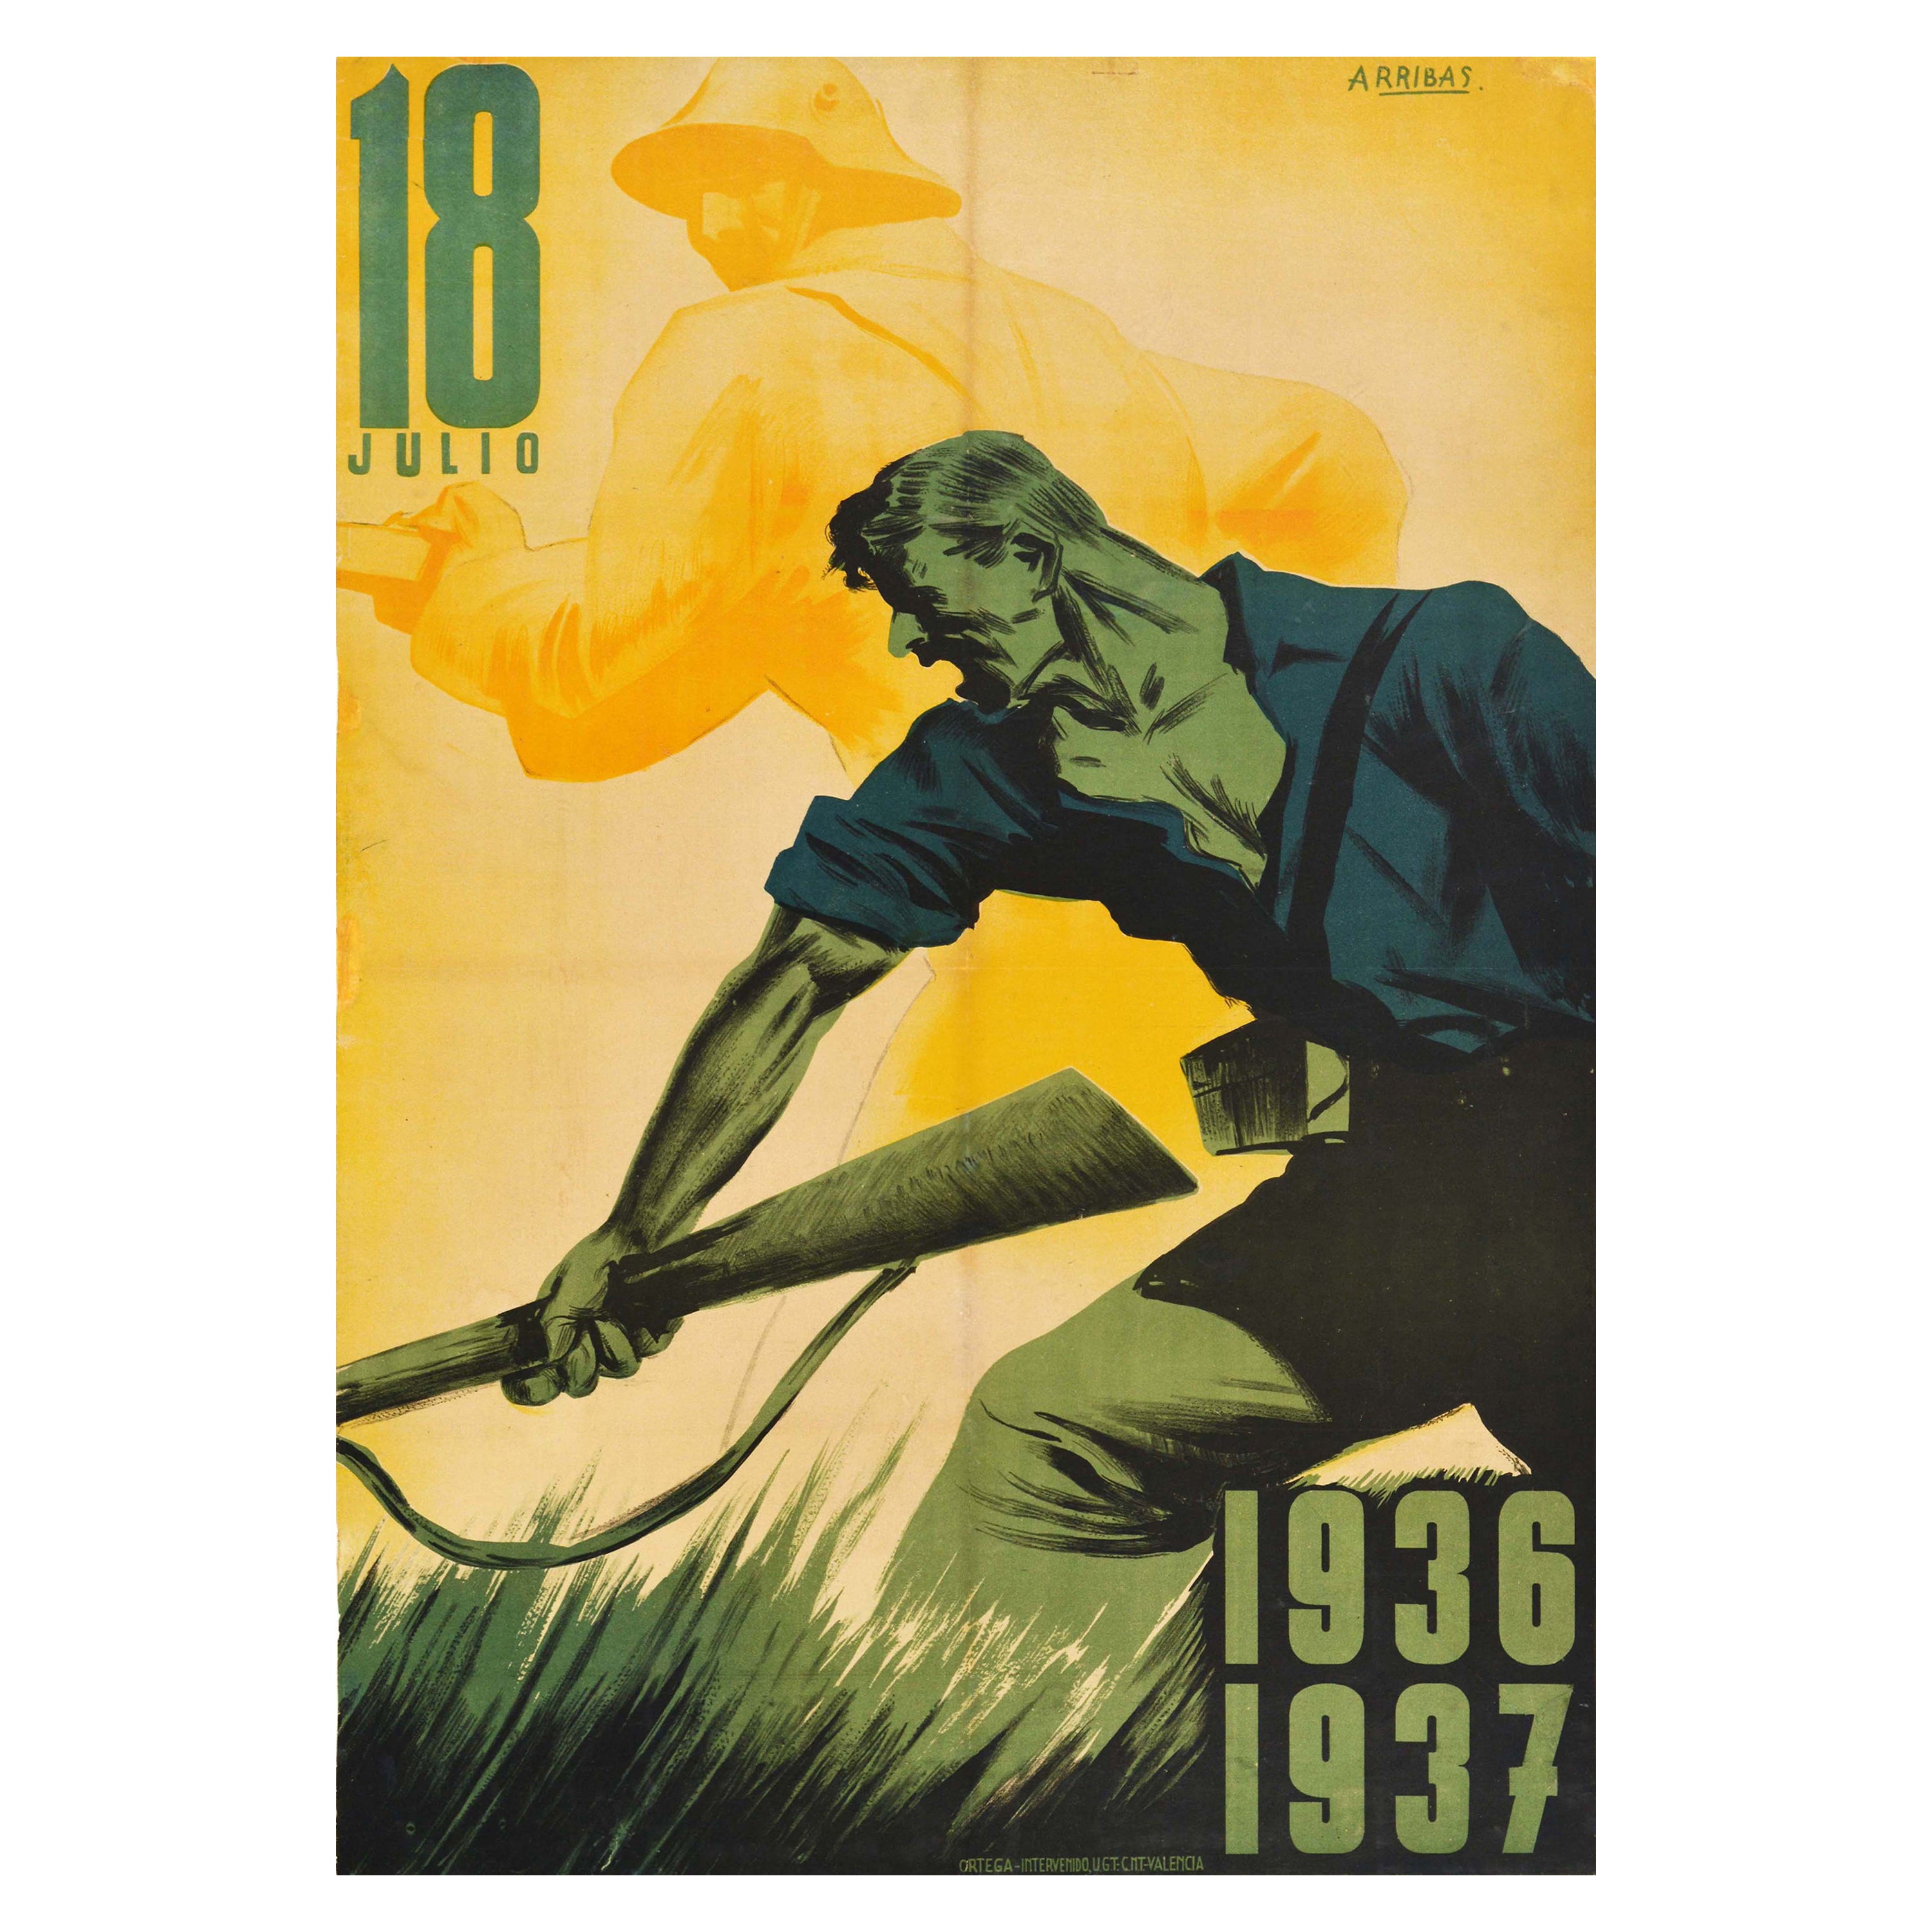 Original Vintage Spanish Civil War Poster July 18 Julio 1936 1937 Anniversary